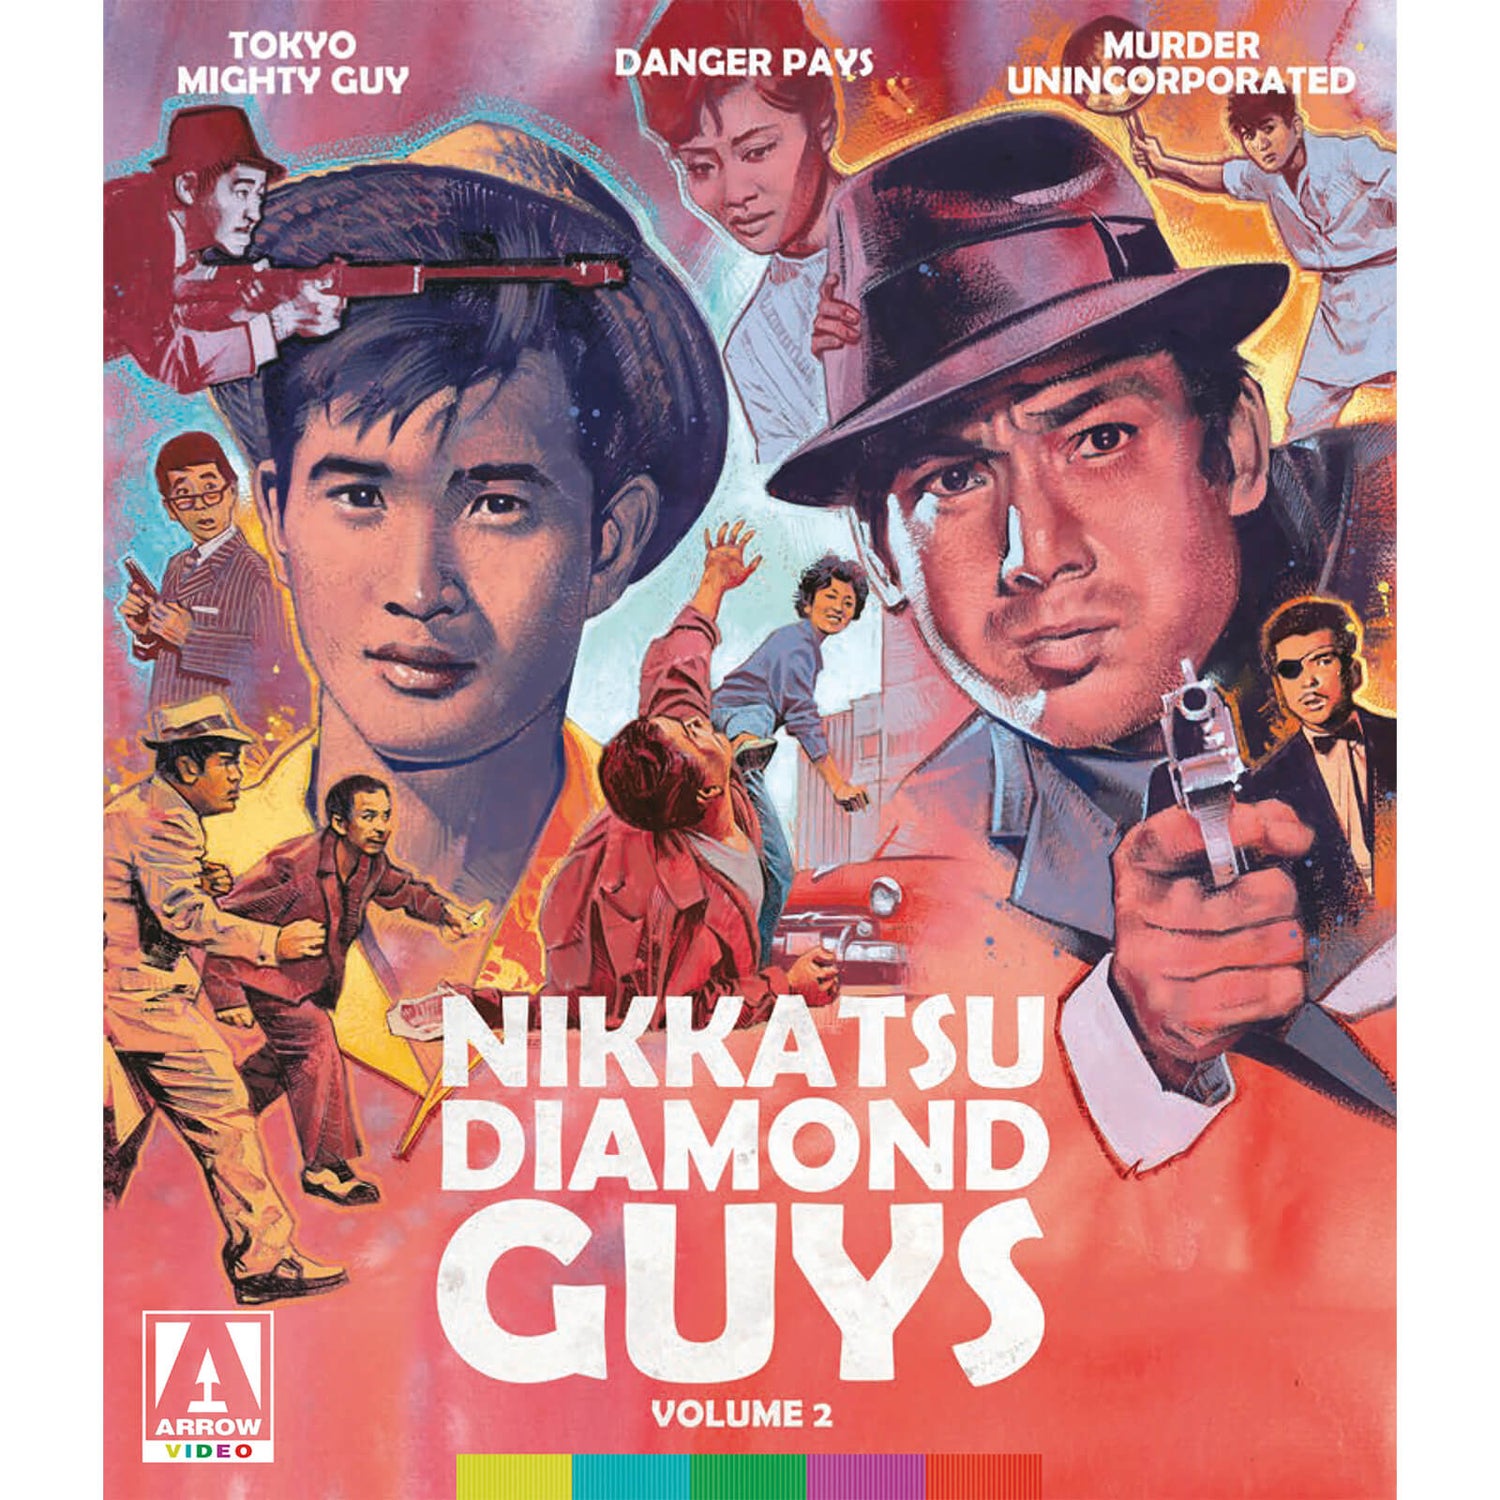 Nikkatsu Diamond Guys Vol. 2 Limited Edition Blu-ray+DVD